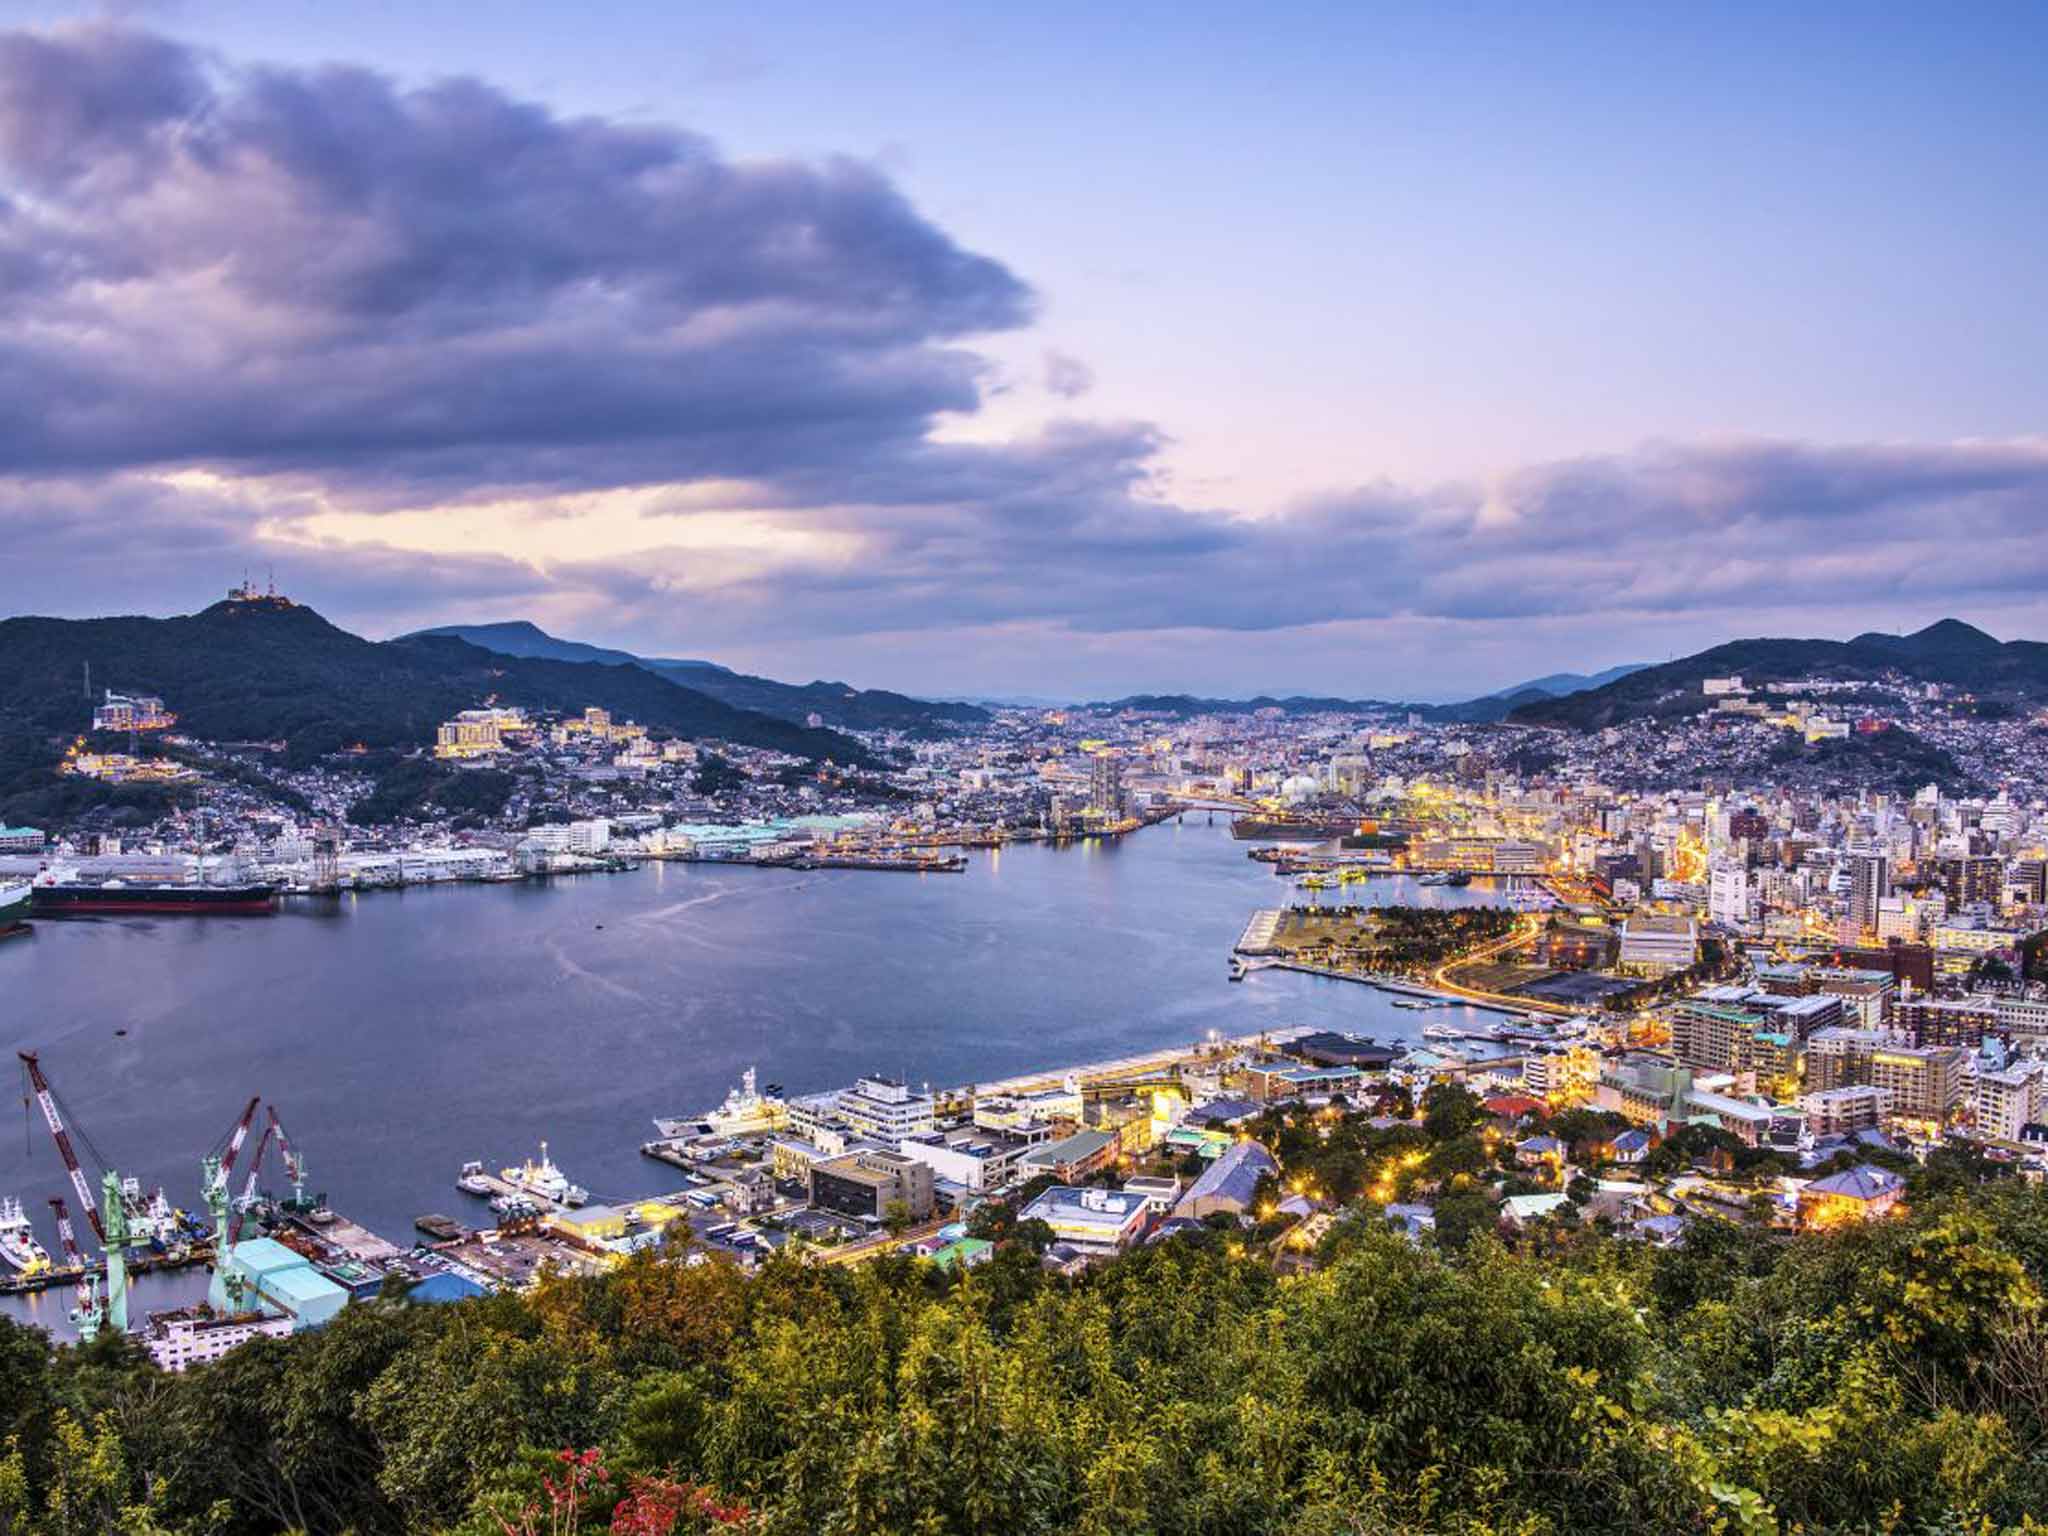 Nagasaki A dashing metropolis that has shown remarkable resilience